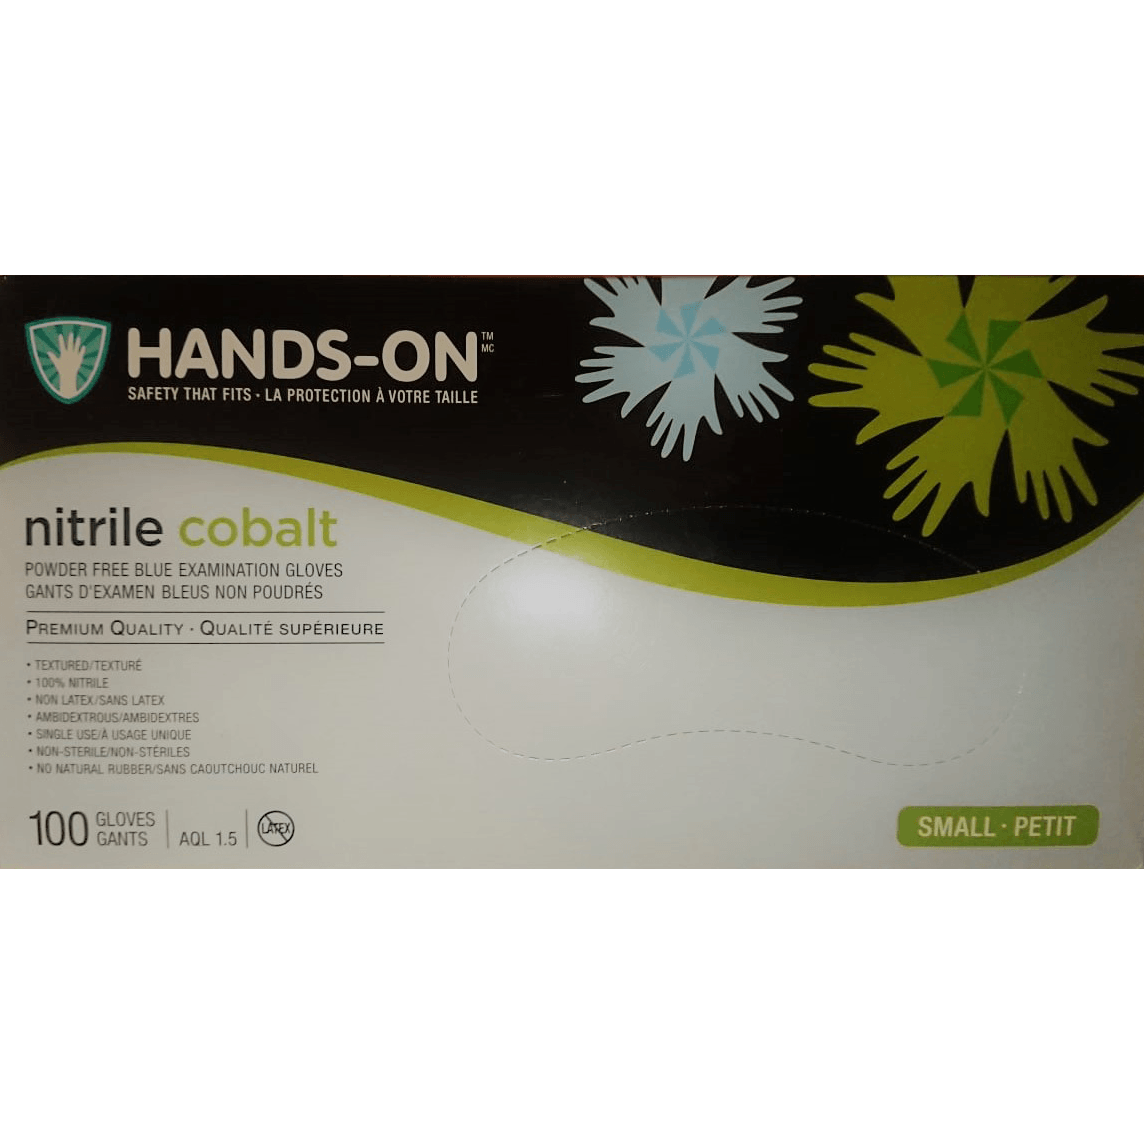 Hands-On Nitrile Cobalt Powder Free Gloves 100 Pcs Box